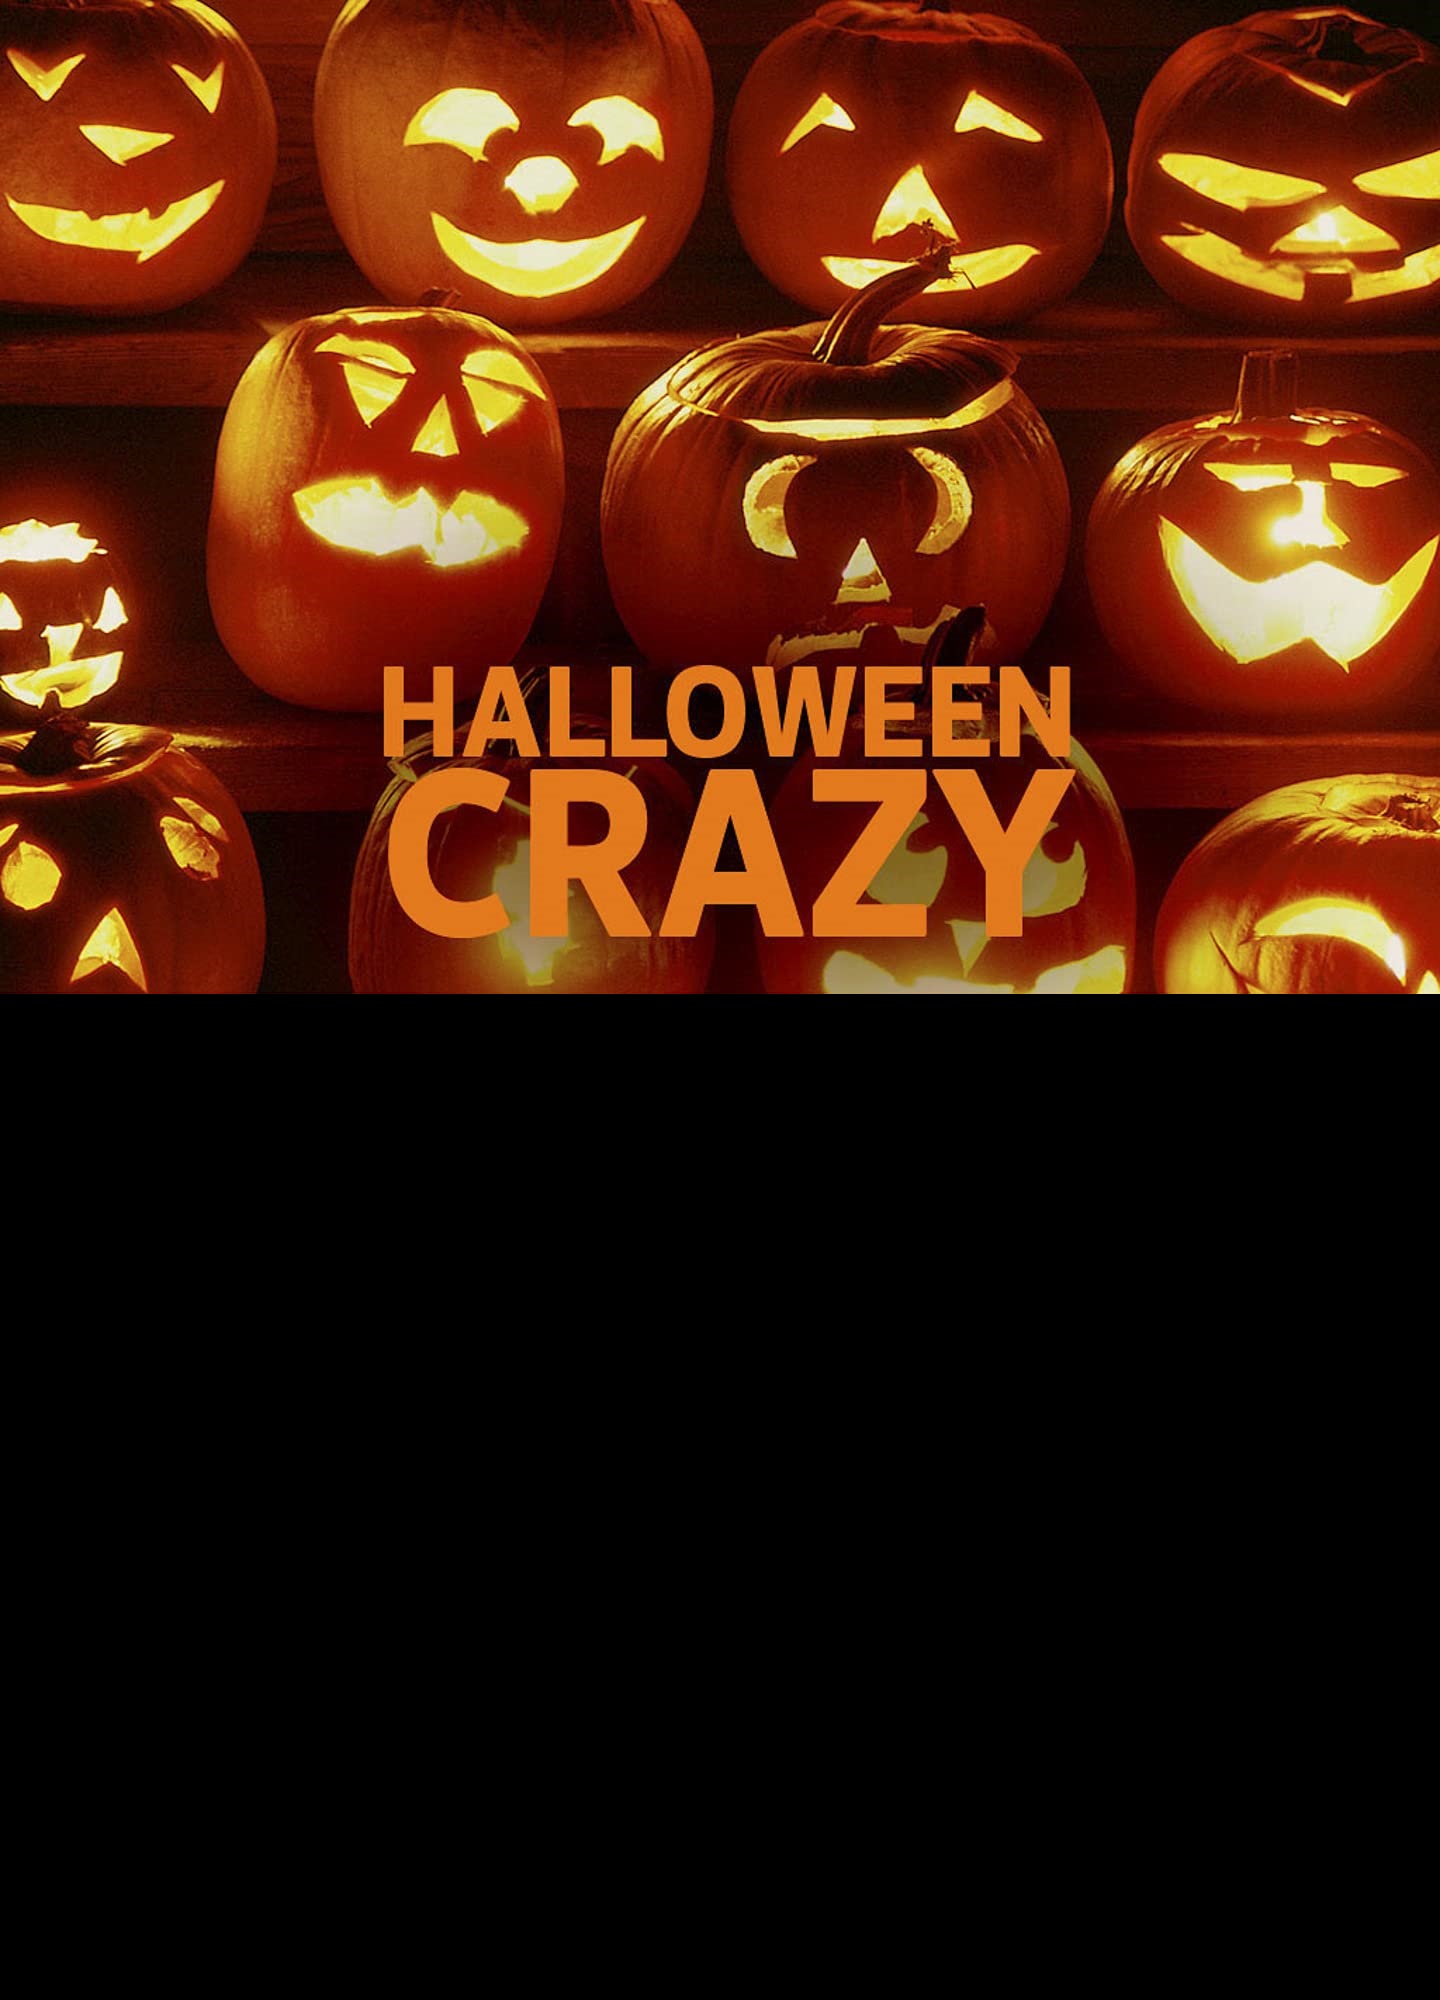 Halloween Crazy (2011) starring Jude Corbett on DVD on DVD